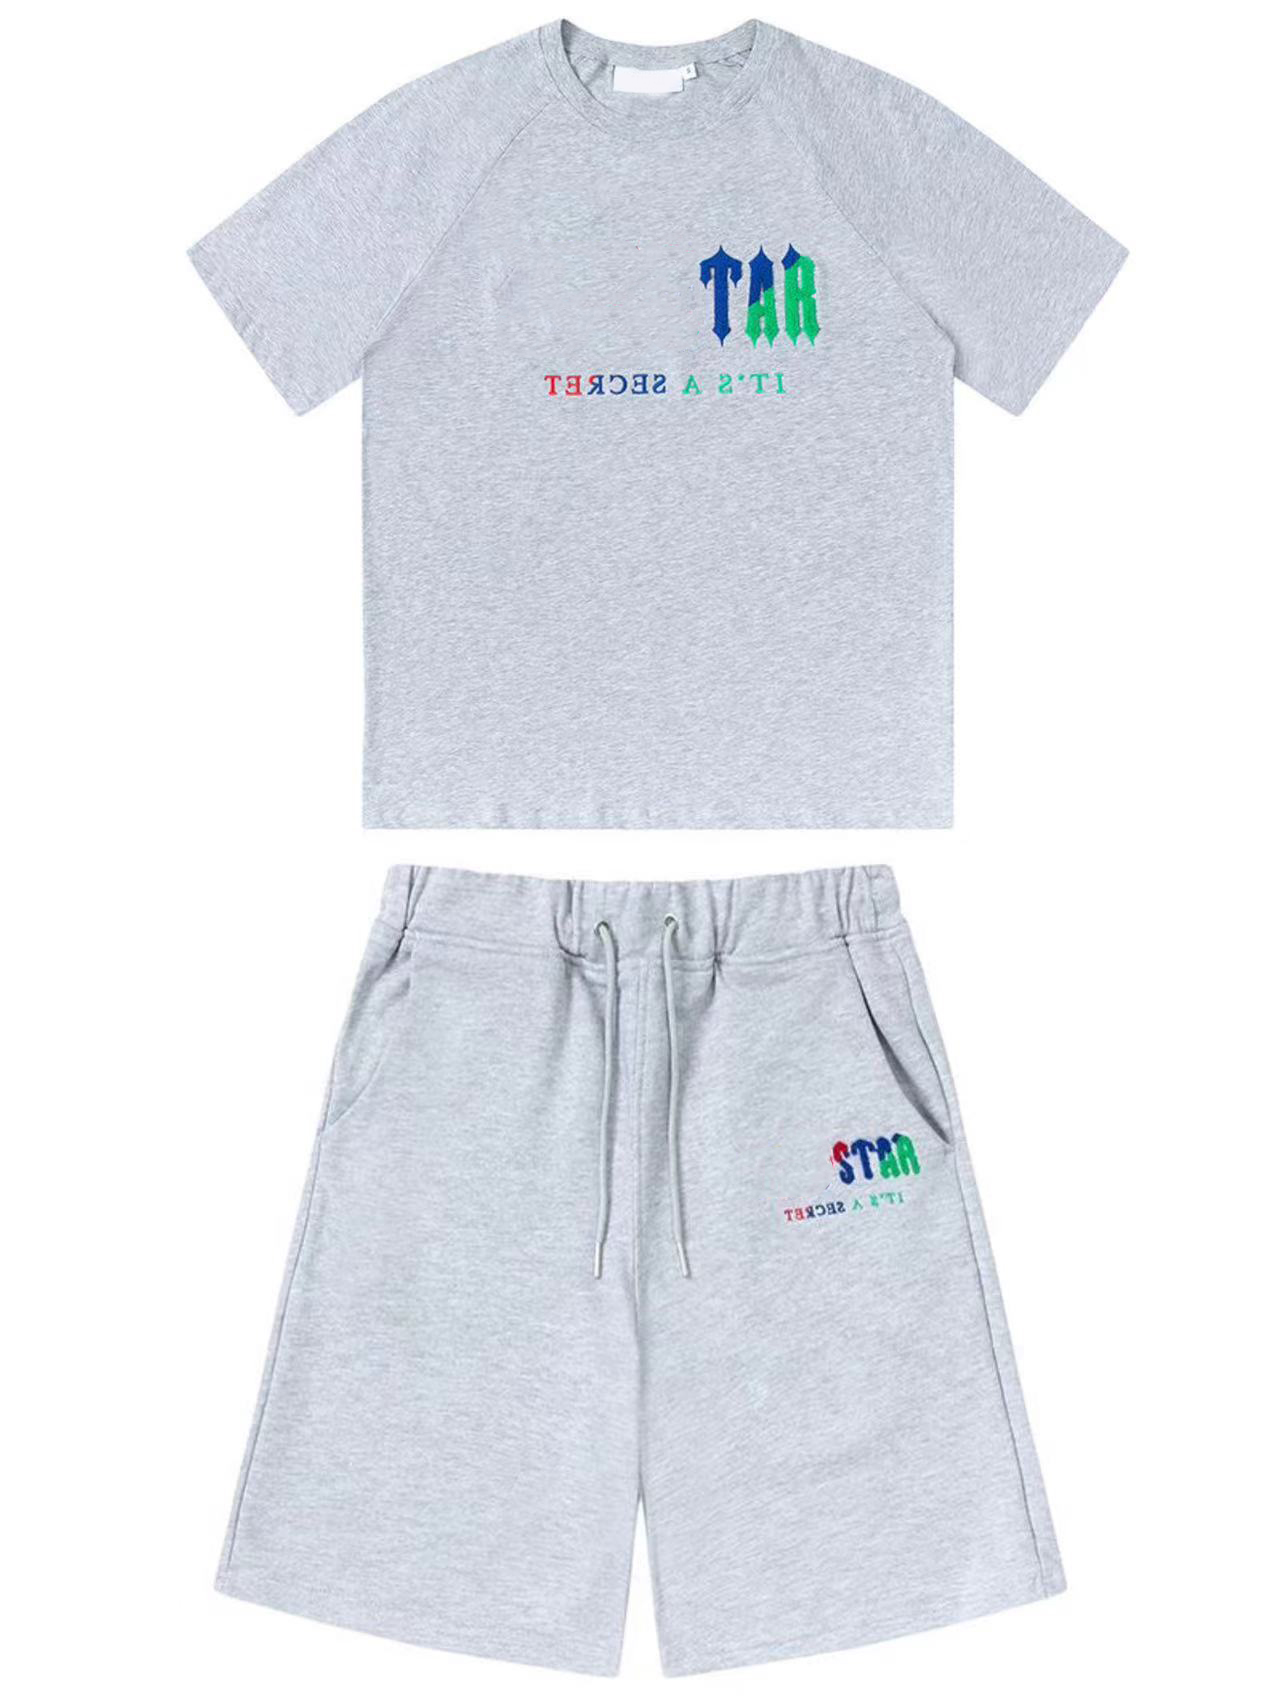 Heren tracksuits t-shirt sets pluche letter casual ademende zomerpakken tops shorts shorts tees outdoor sport aziatische maat s-2xl